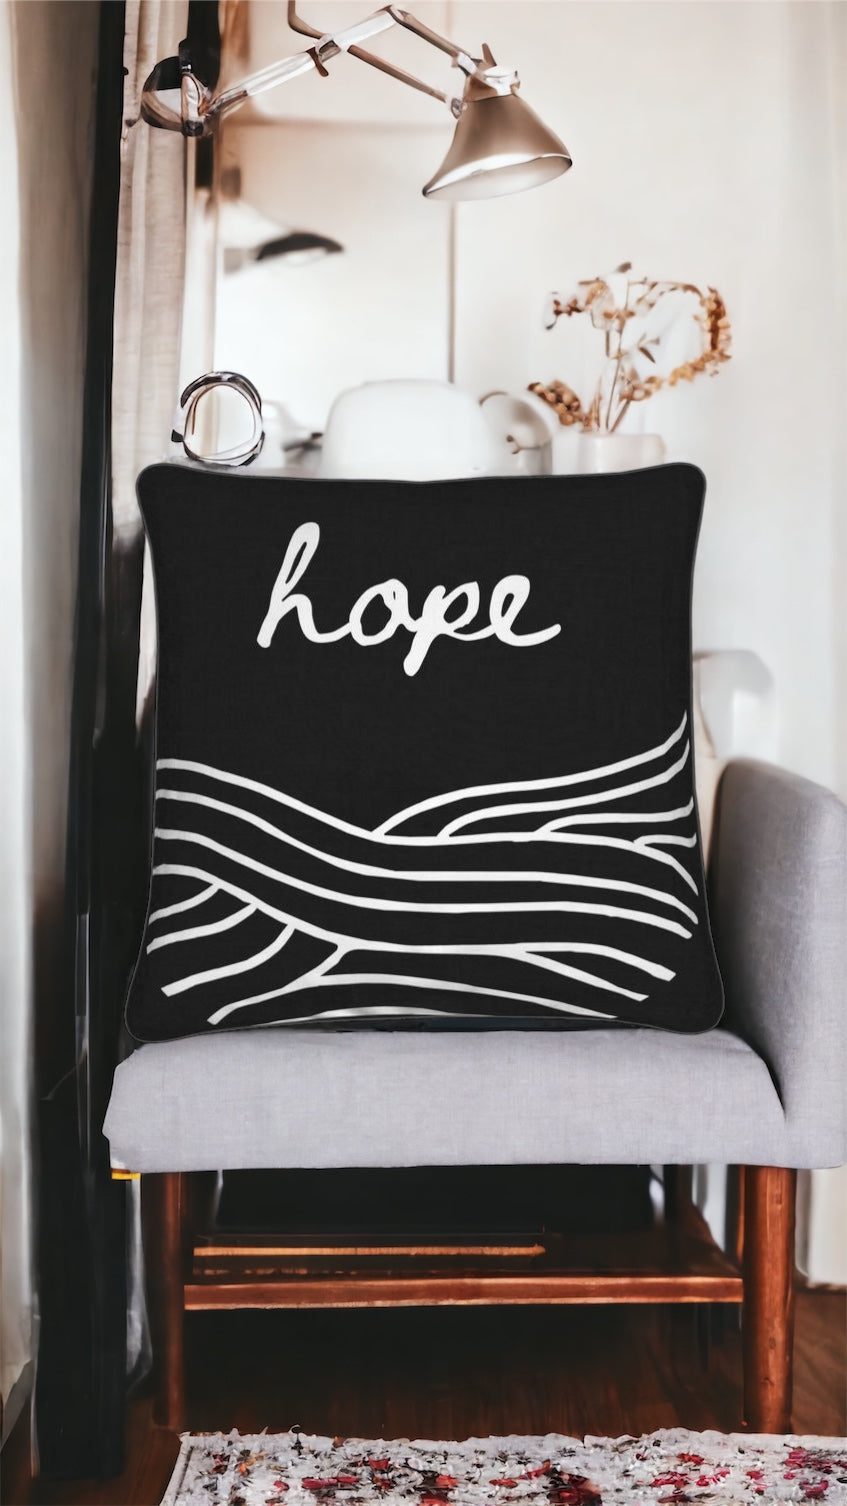 Hope Room Pillow Cushion